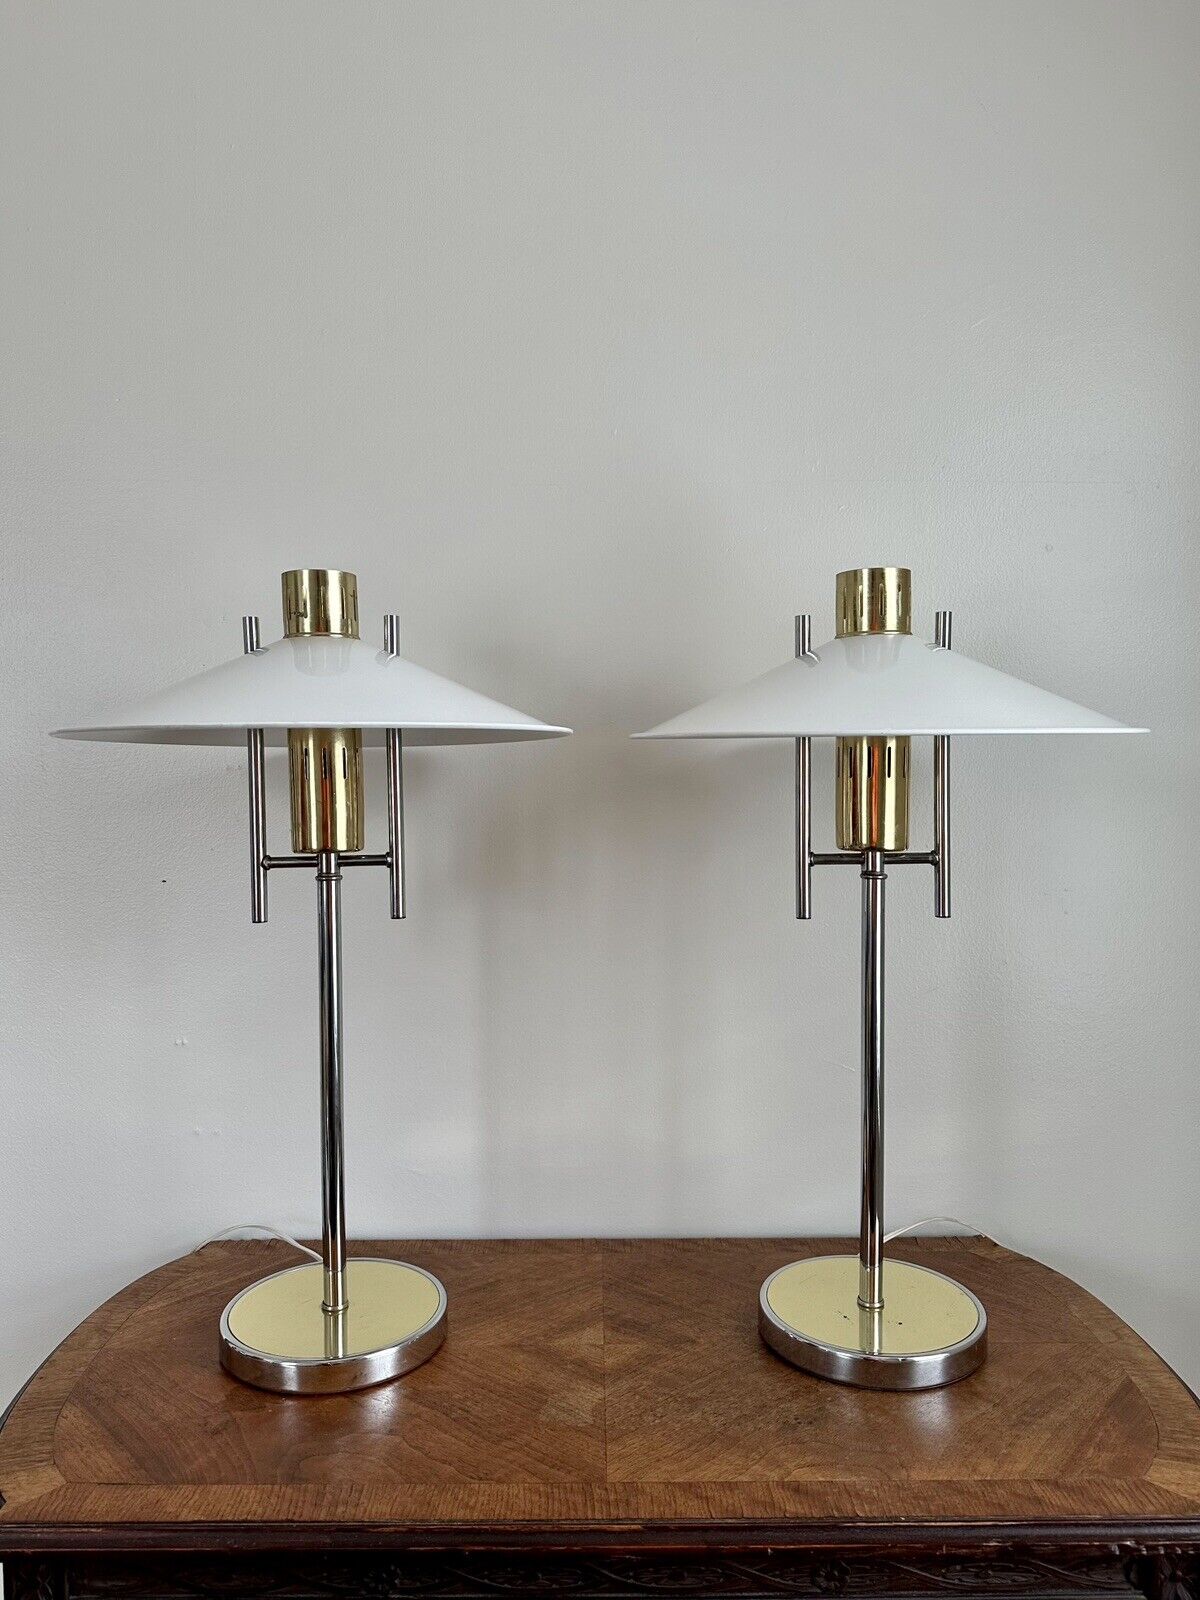 REDUCED Rare Modern / Postmodern Table Lamps, Robert Sonneman, c. 1970s PAIR